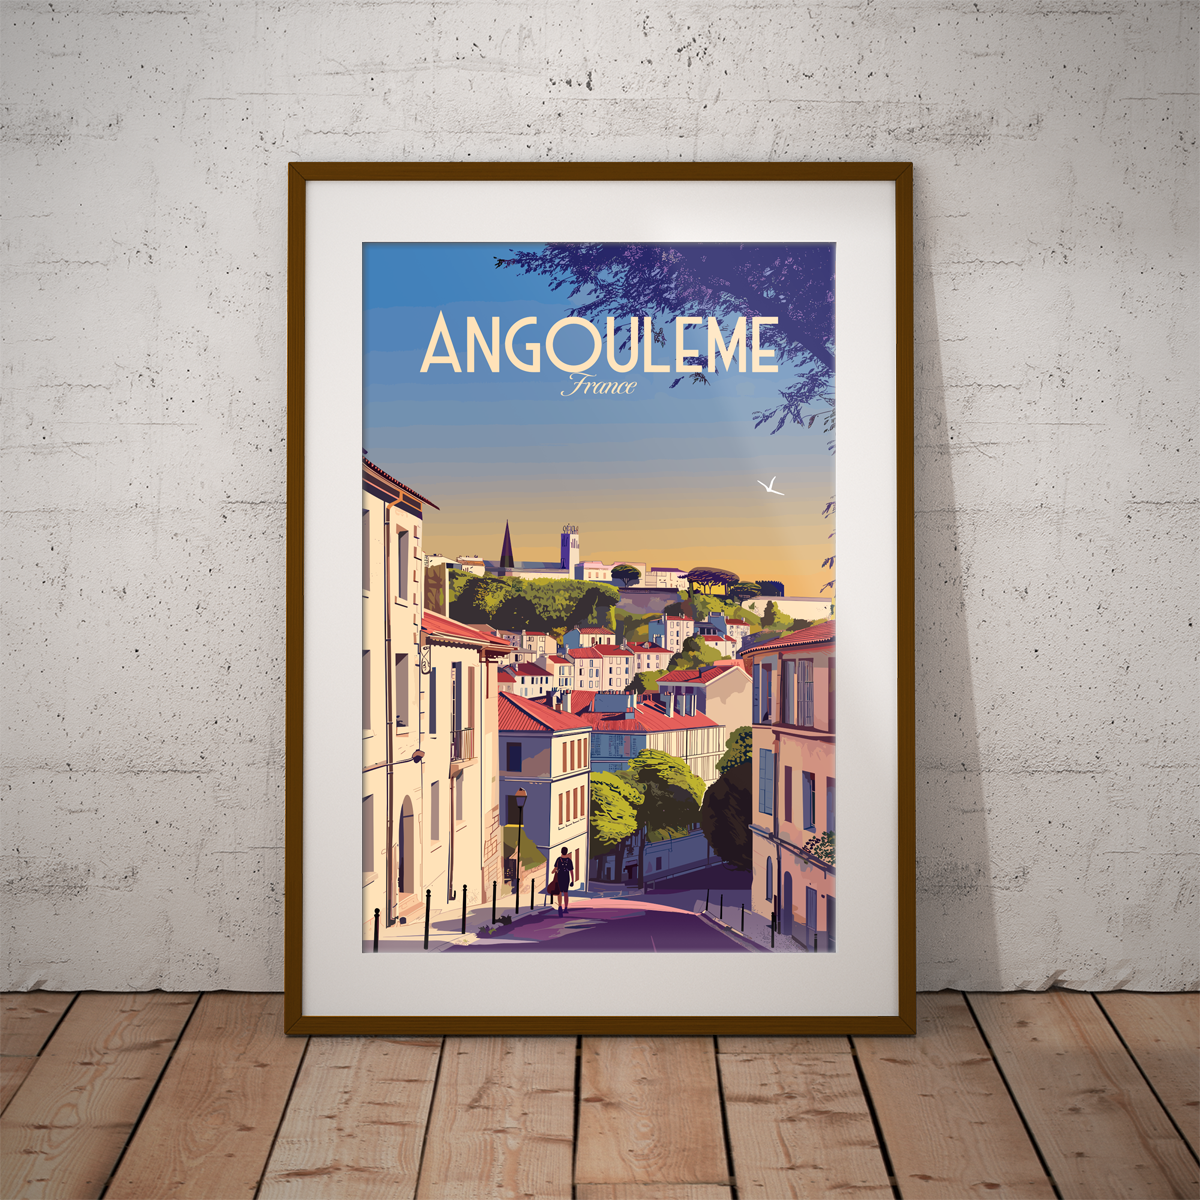 Angouleme poster by bon voyage design